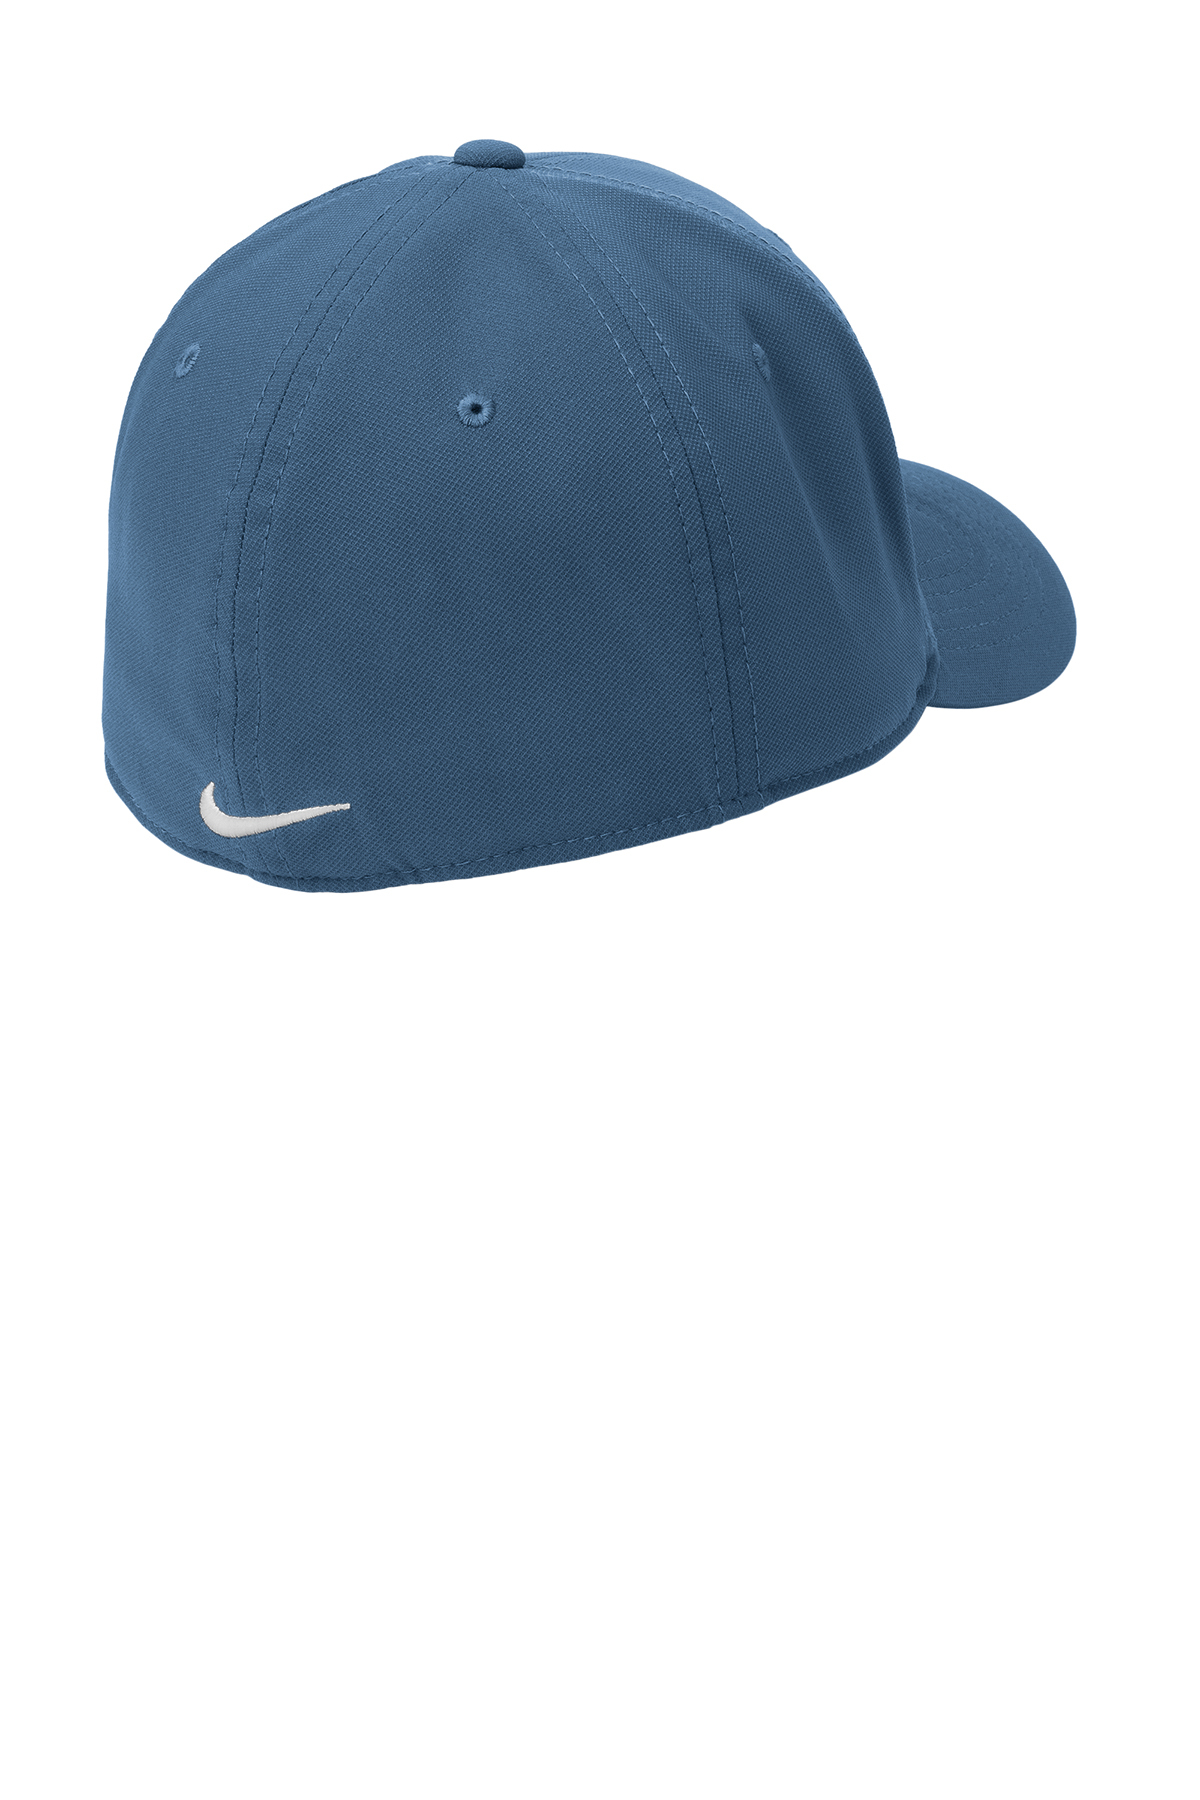 Nike Dri-FIT Classic 99 Cap | Product | SanMar